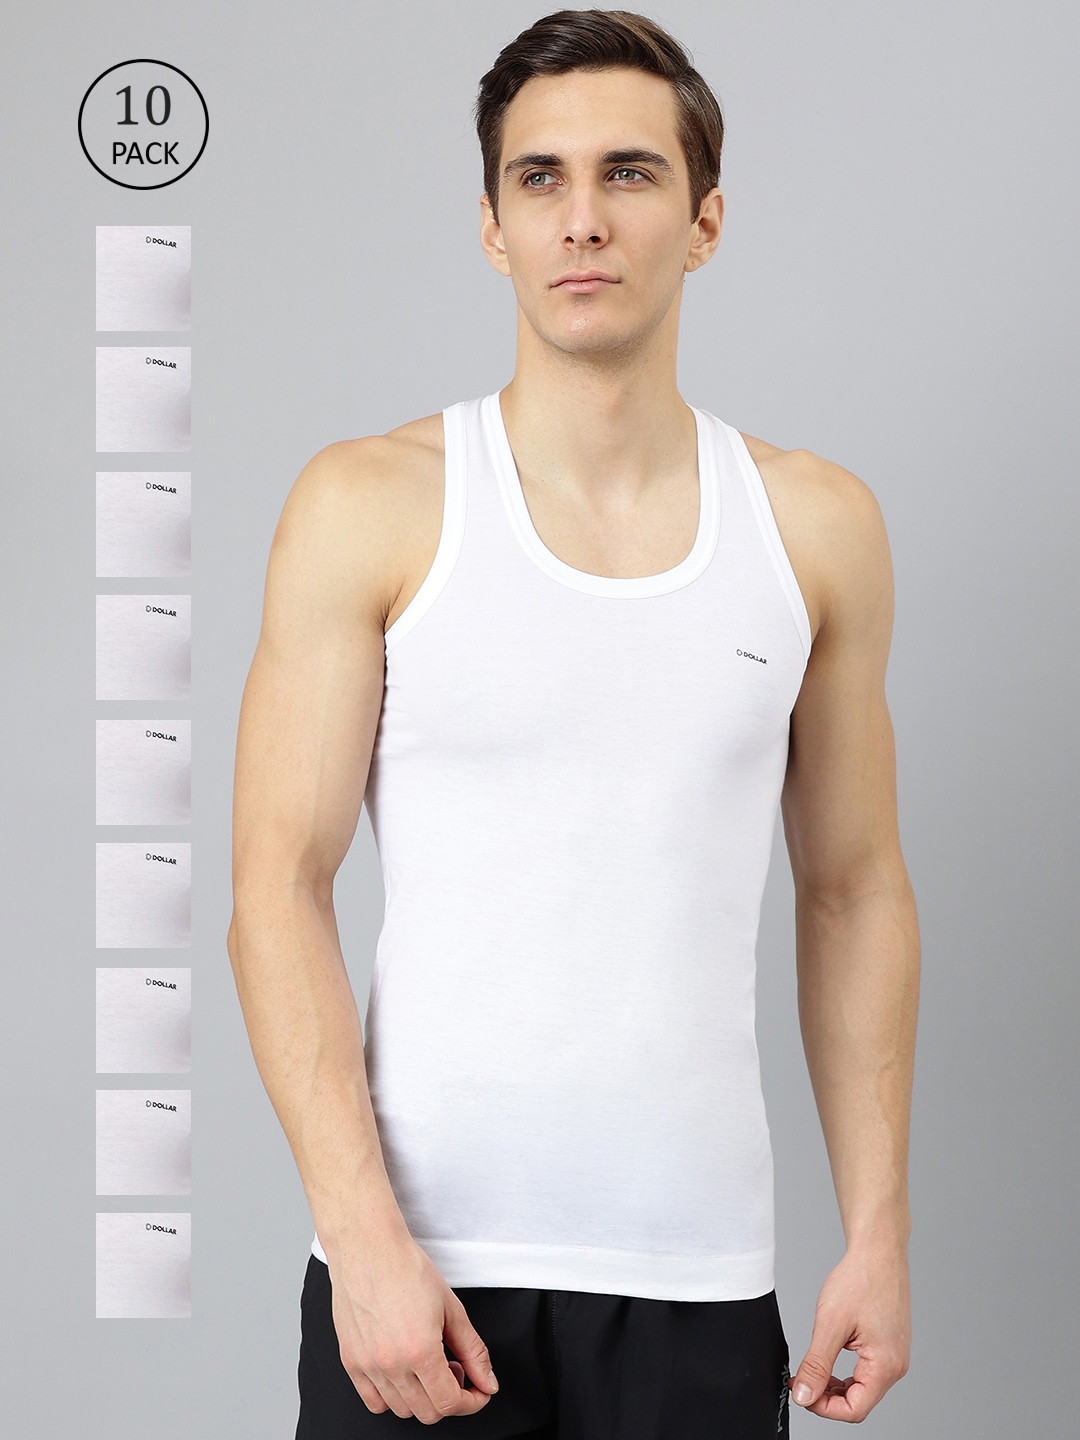 Buy DOLLAR BIGBOSS Men's Assorted Pack of 3 Cotton Gym Vest